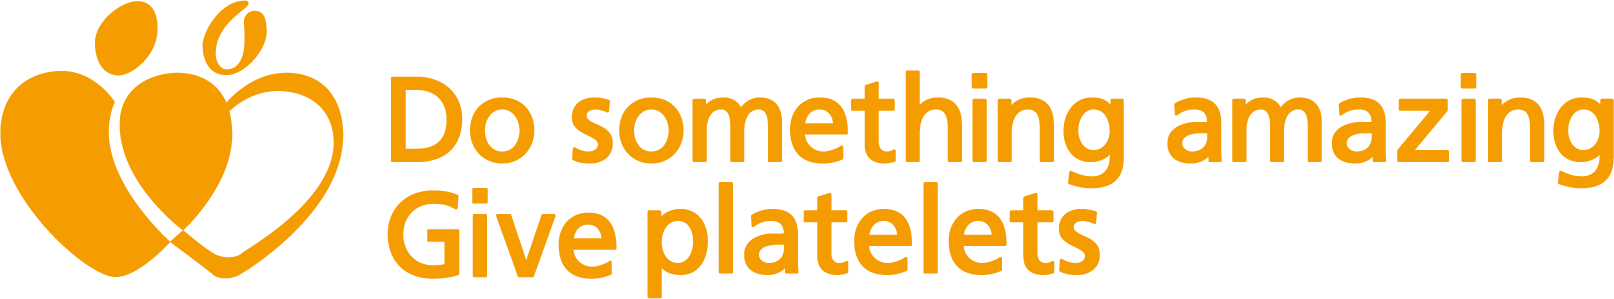 Platelets logo